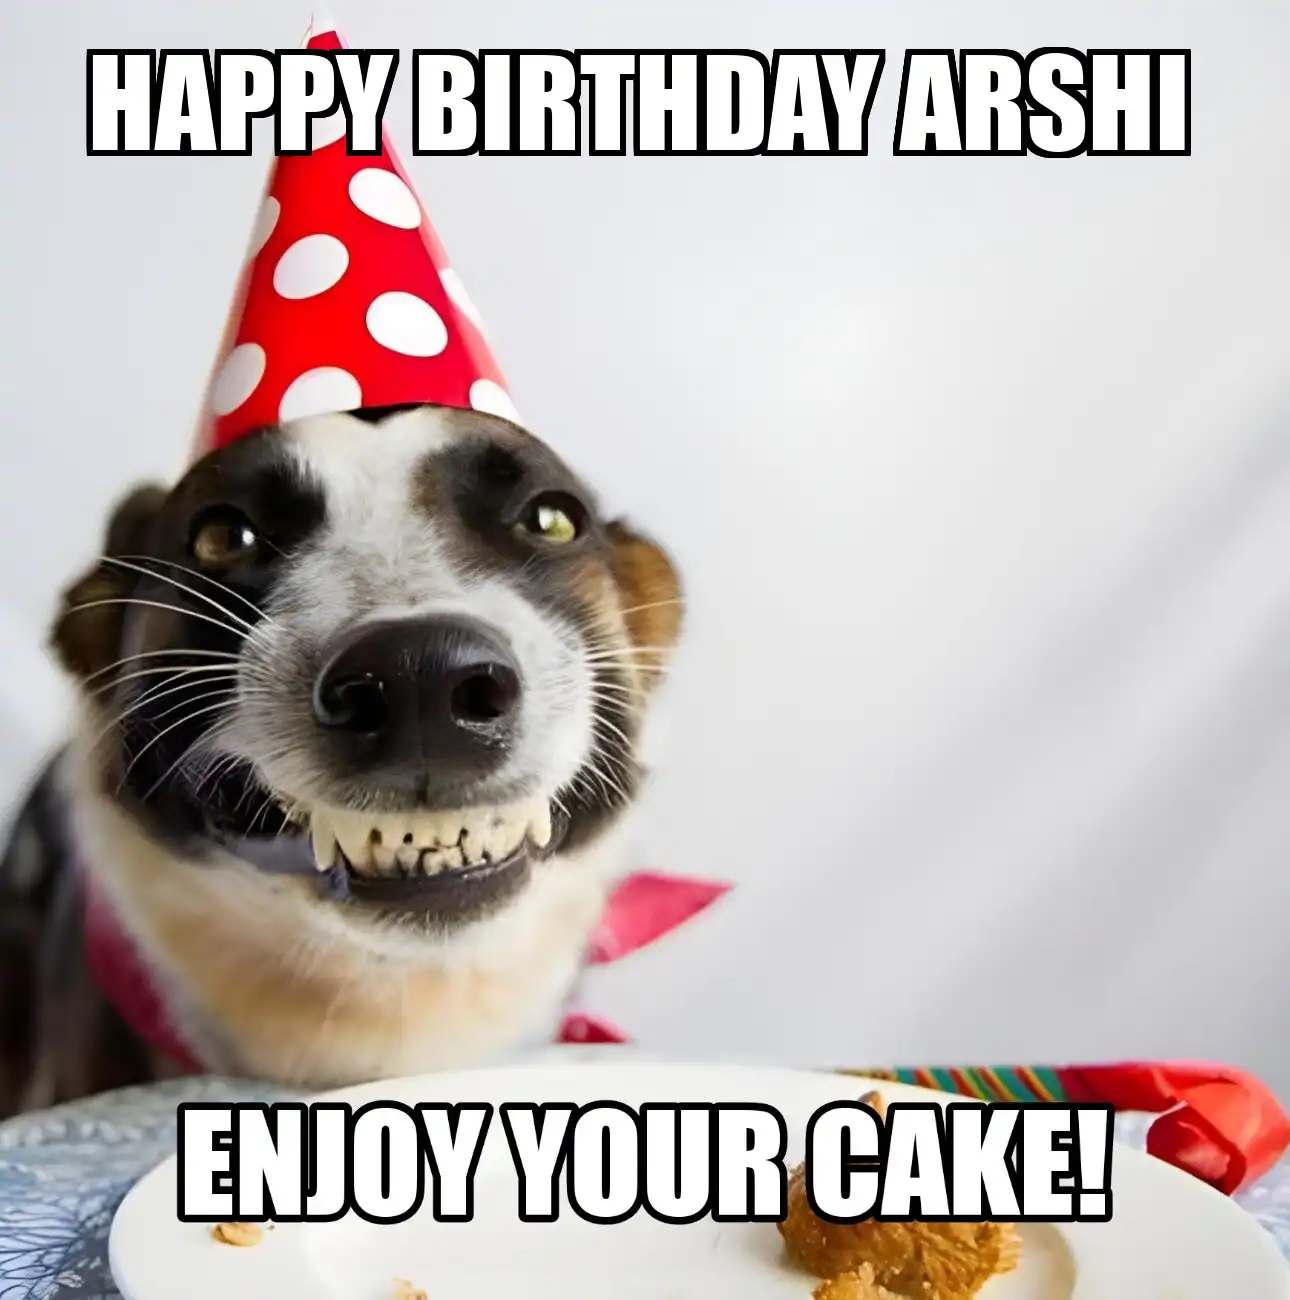 Happy Birthday Arshi Enjoy Your Cake Dog Meme